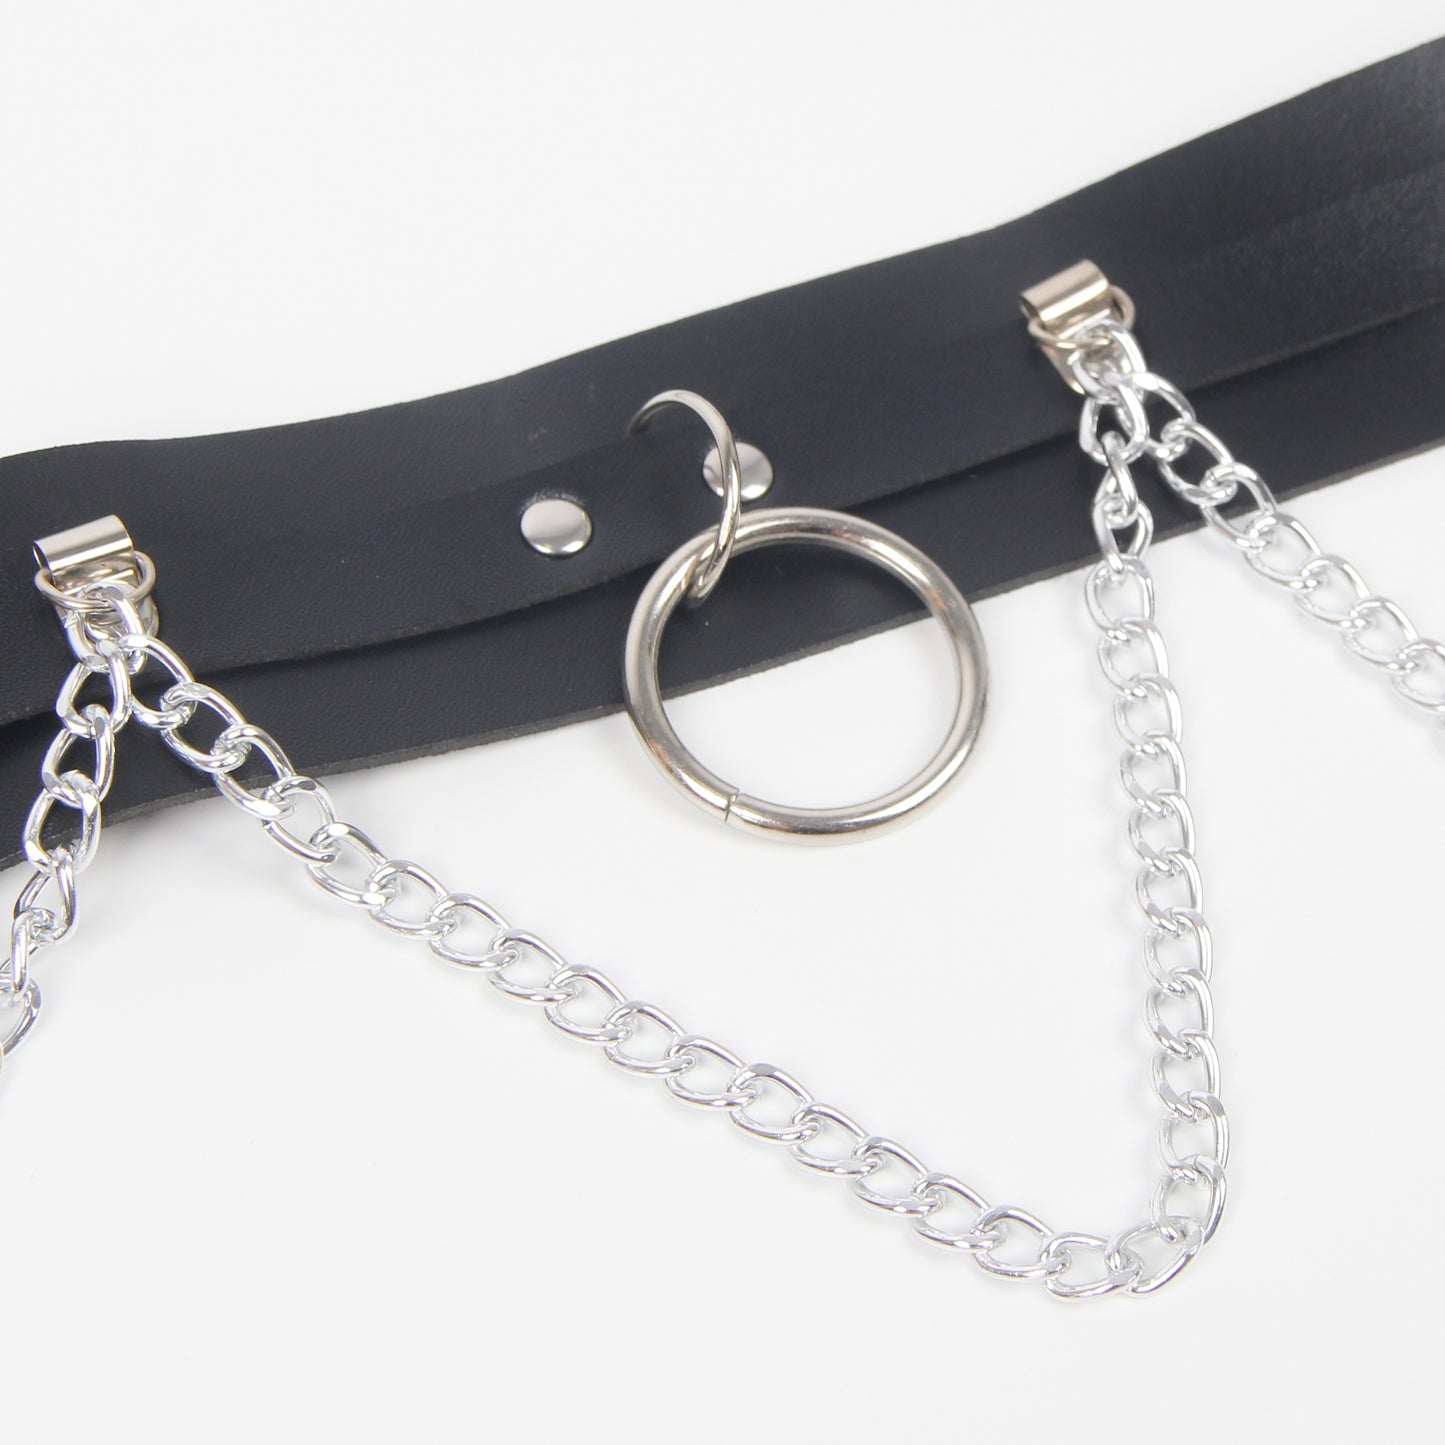 Loveangels Foux Leather Chain Harness Belt